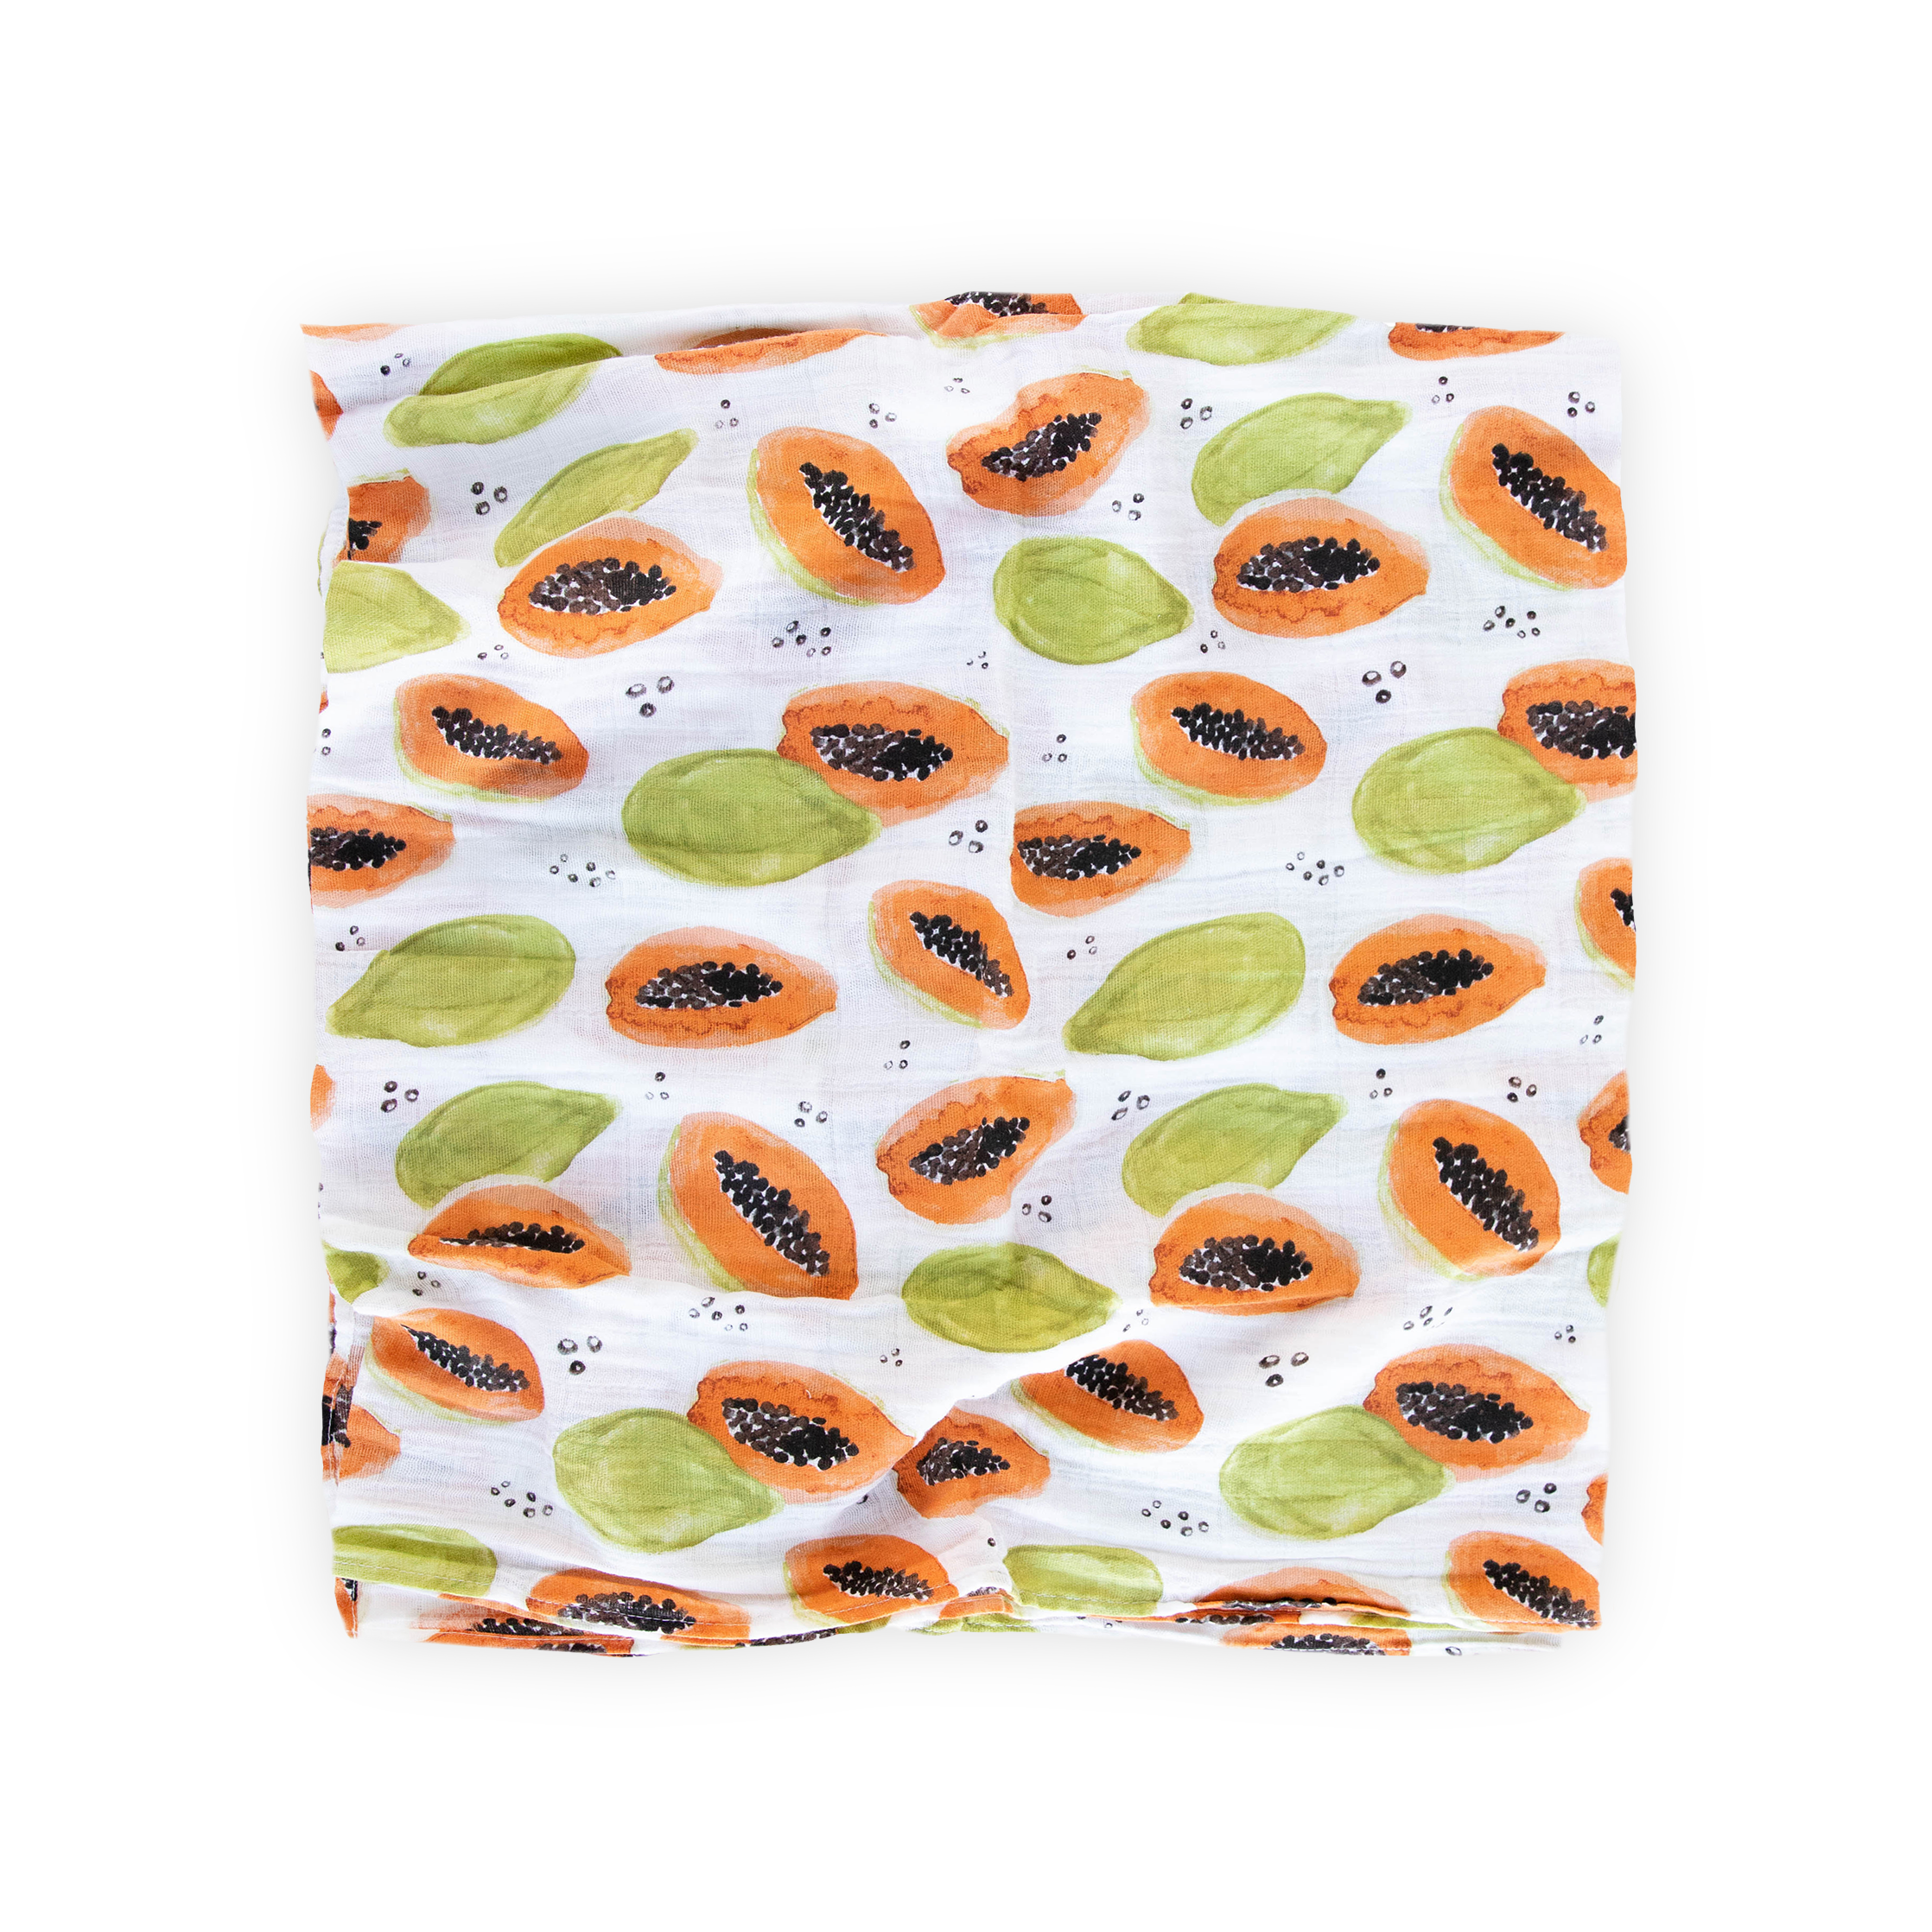 Cotton Muslin Swaddle Blanket - Papaya